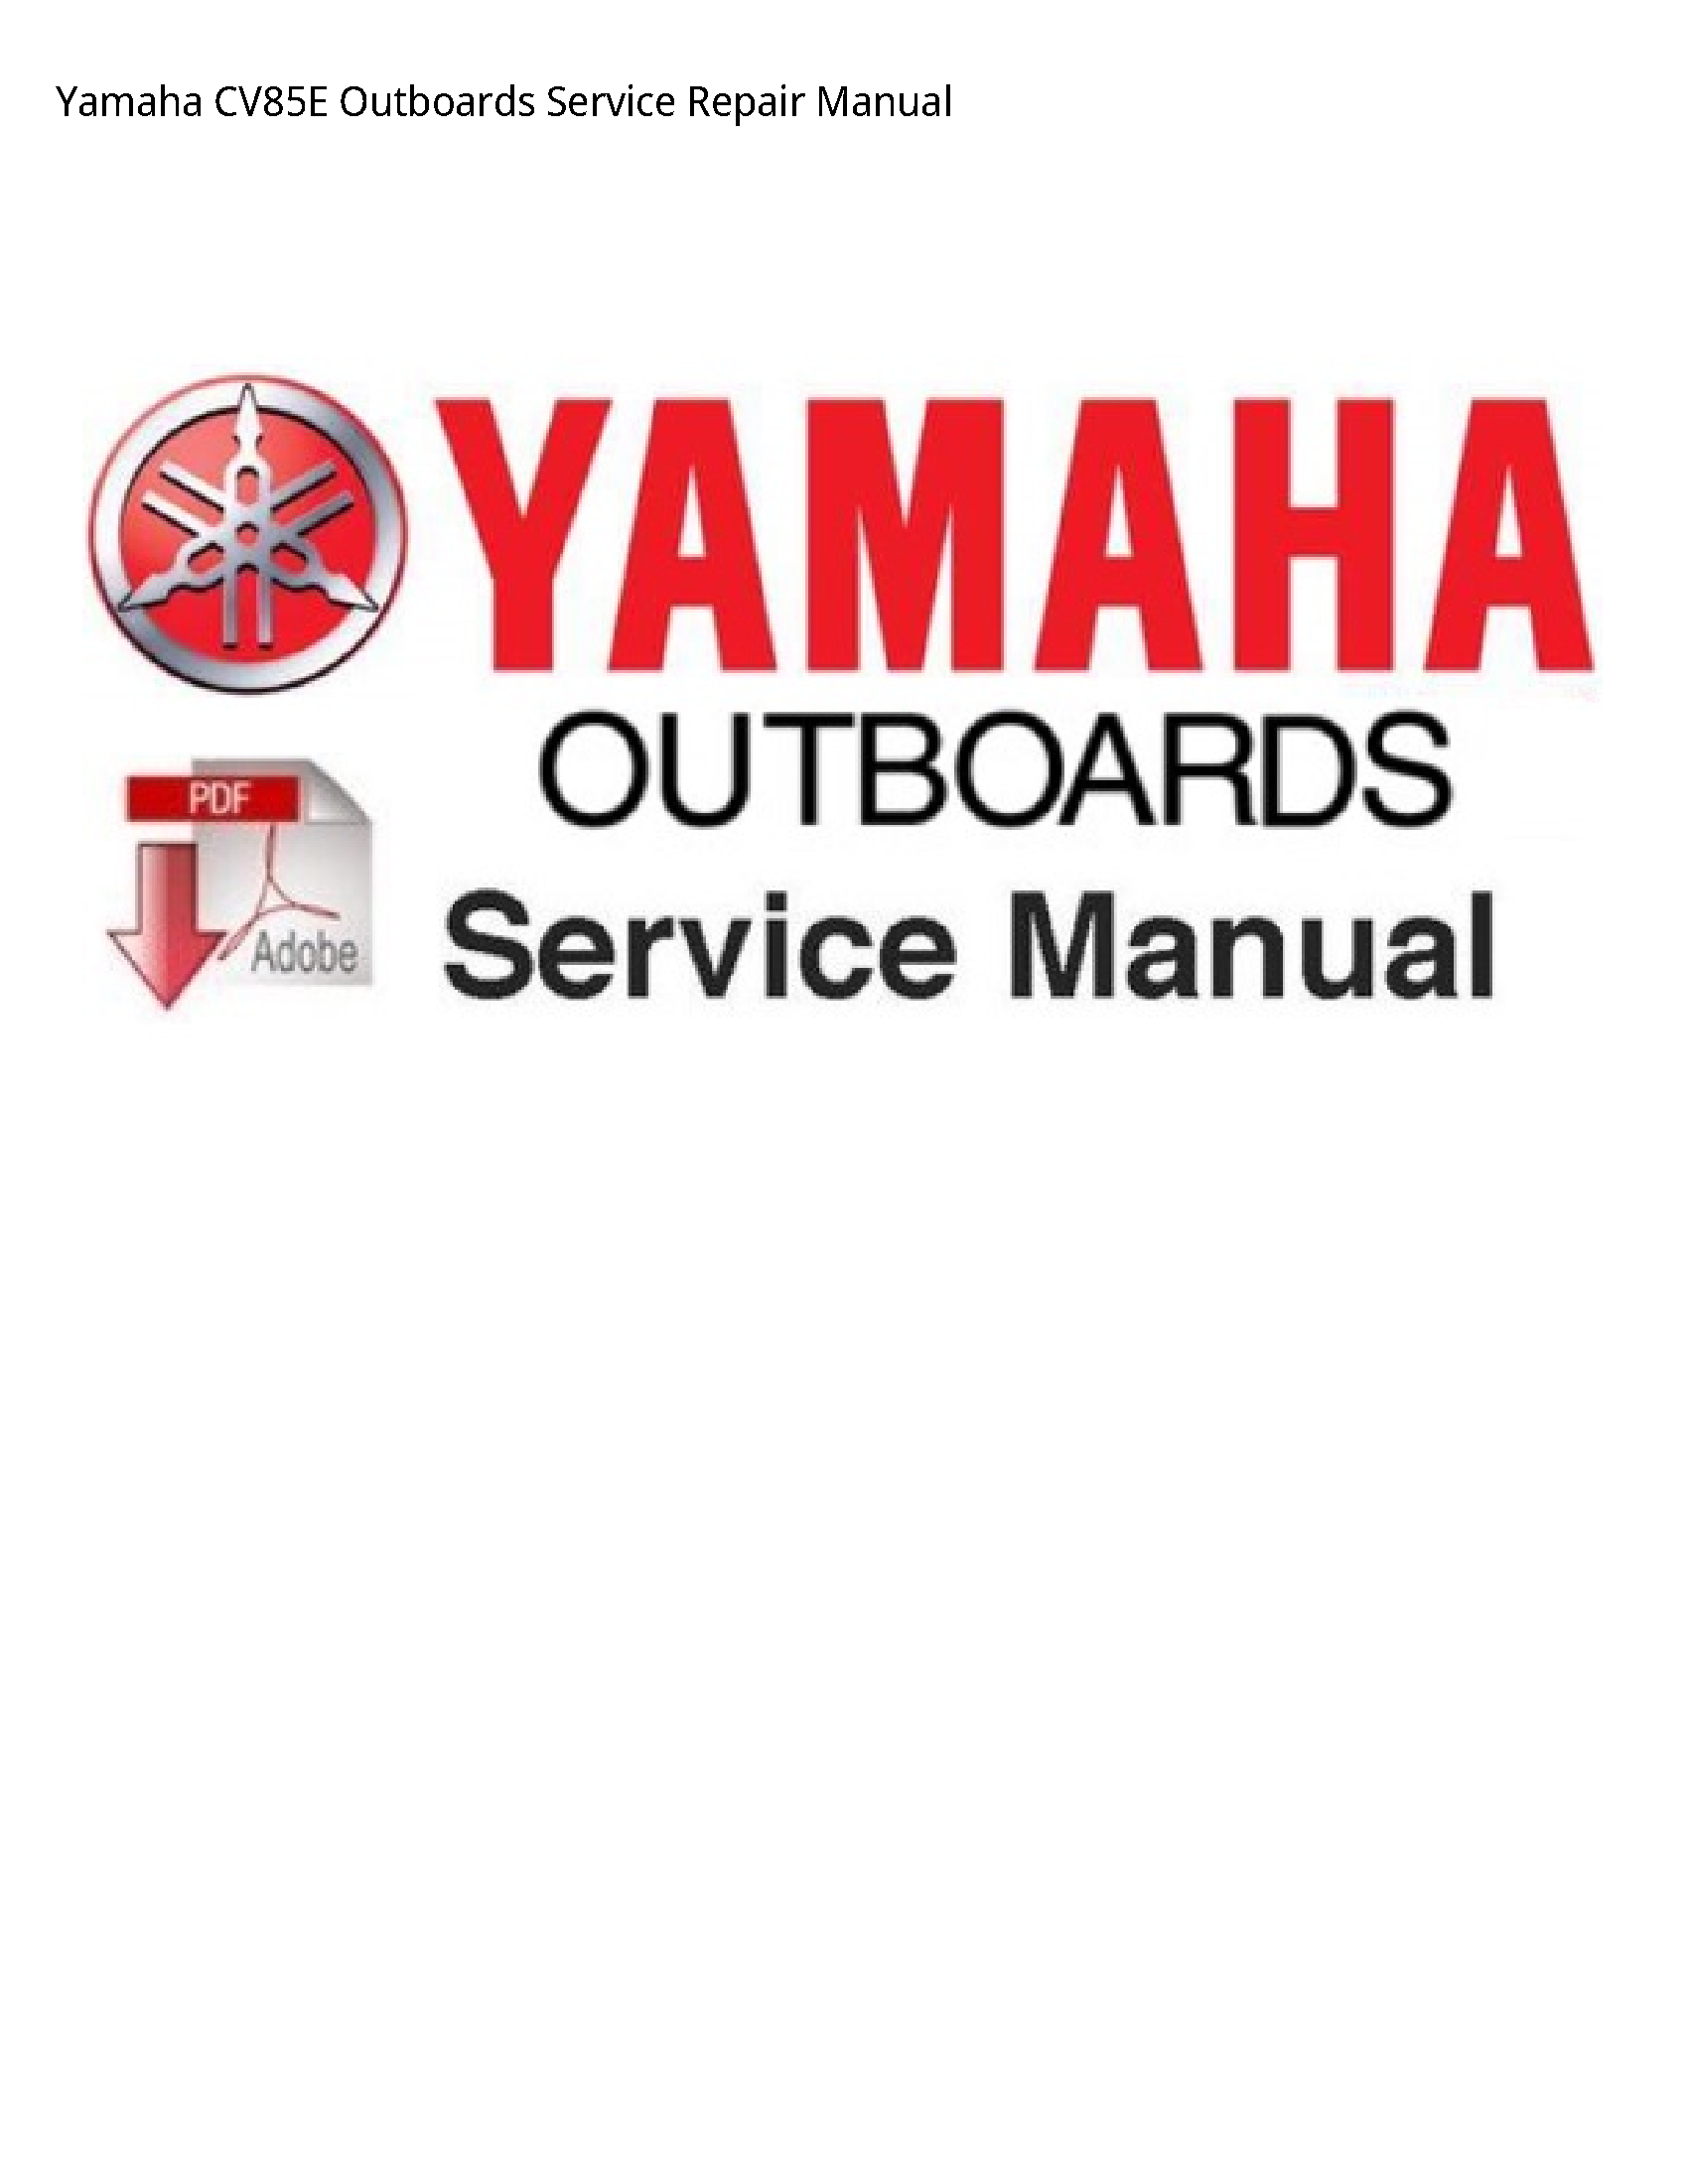 Yamaha CV85E Outboards manual